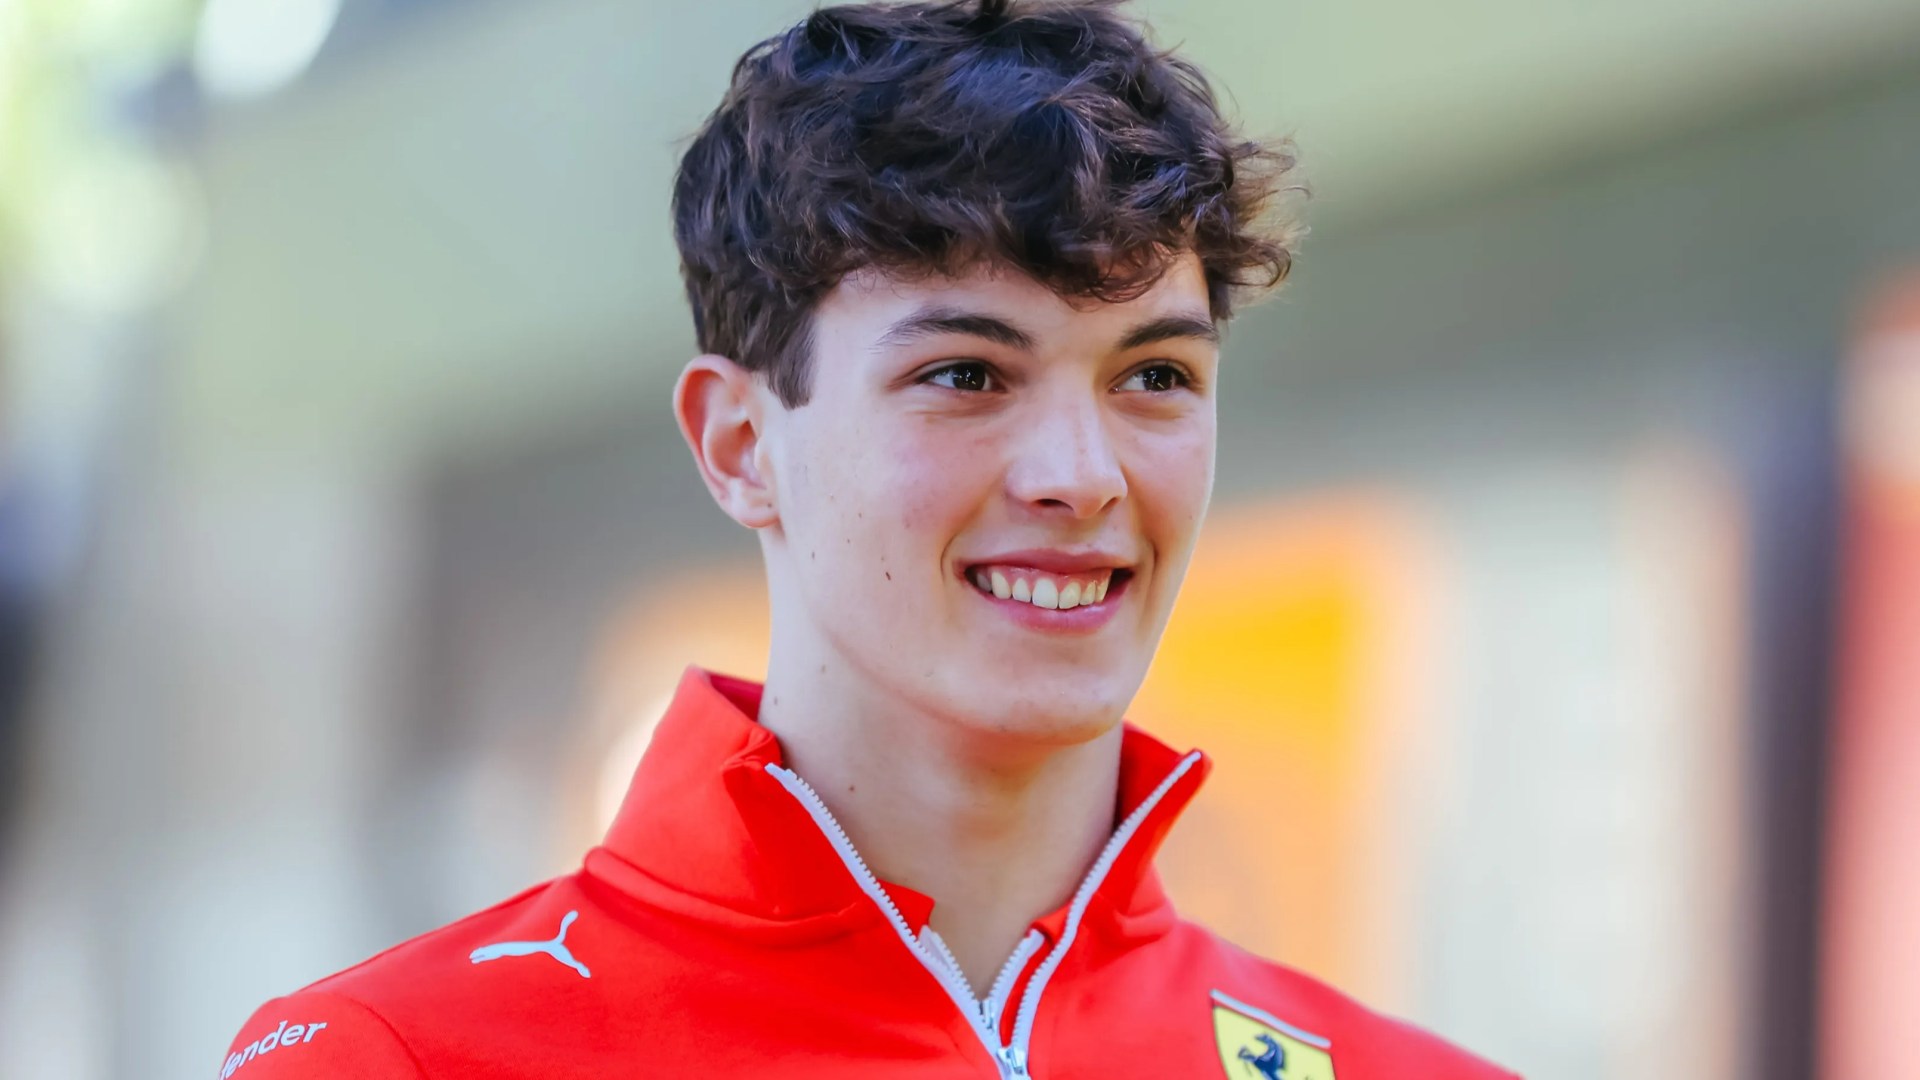 Oliver Bearman, 18, will not keep Ferrari F1 place for Australian GP despite amazing debut in Saudi